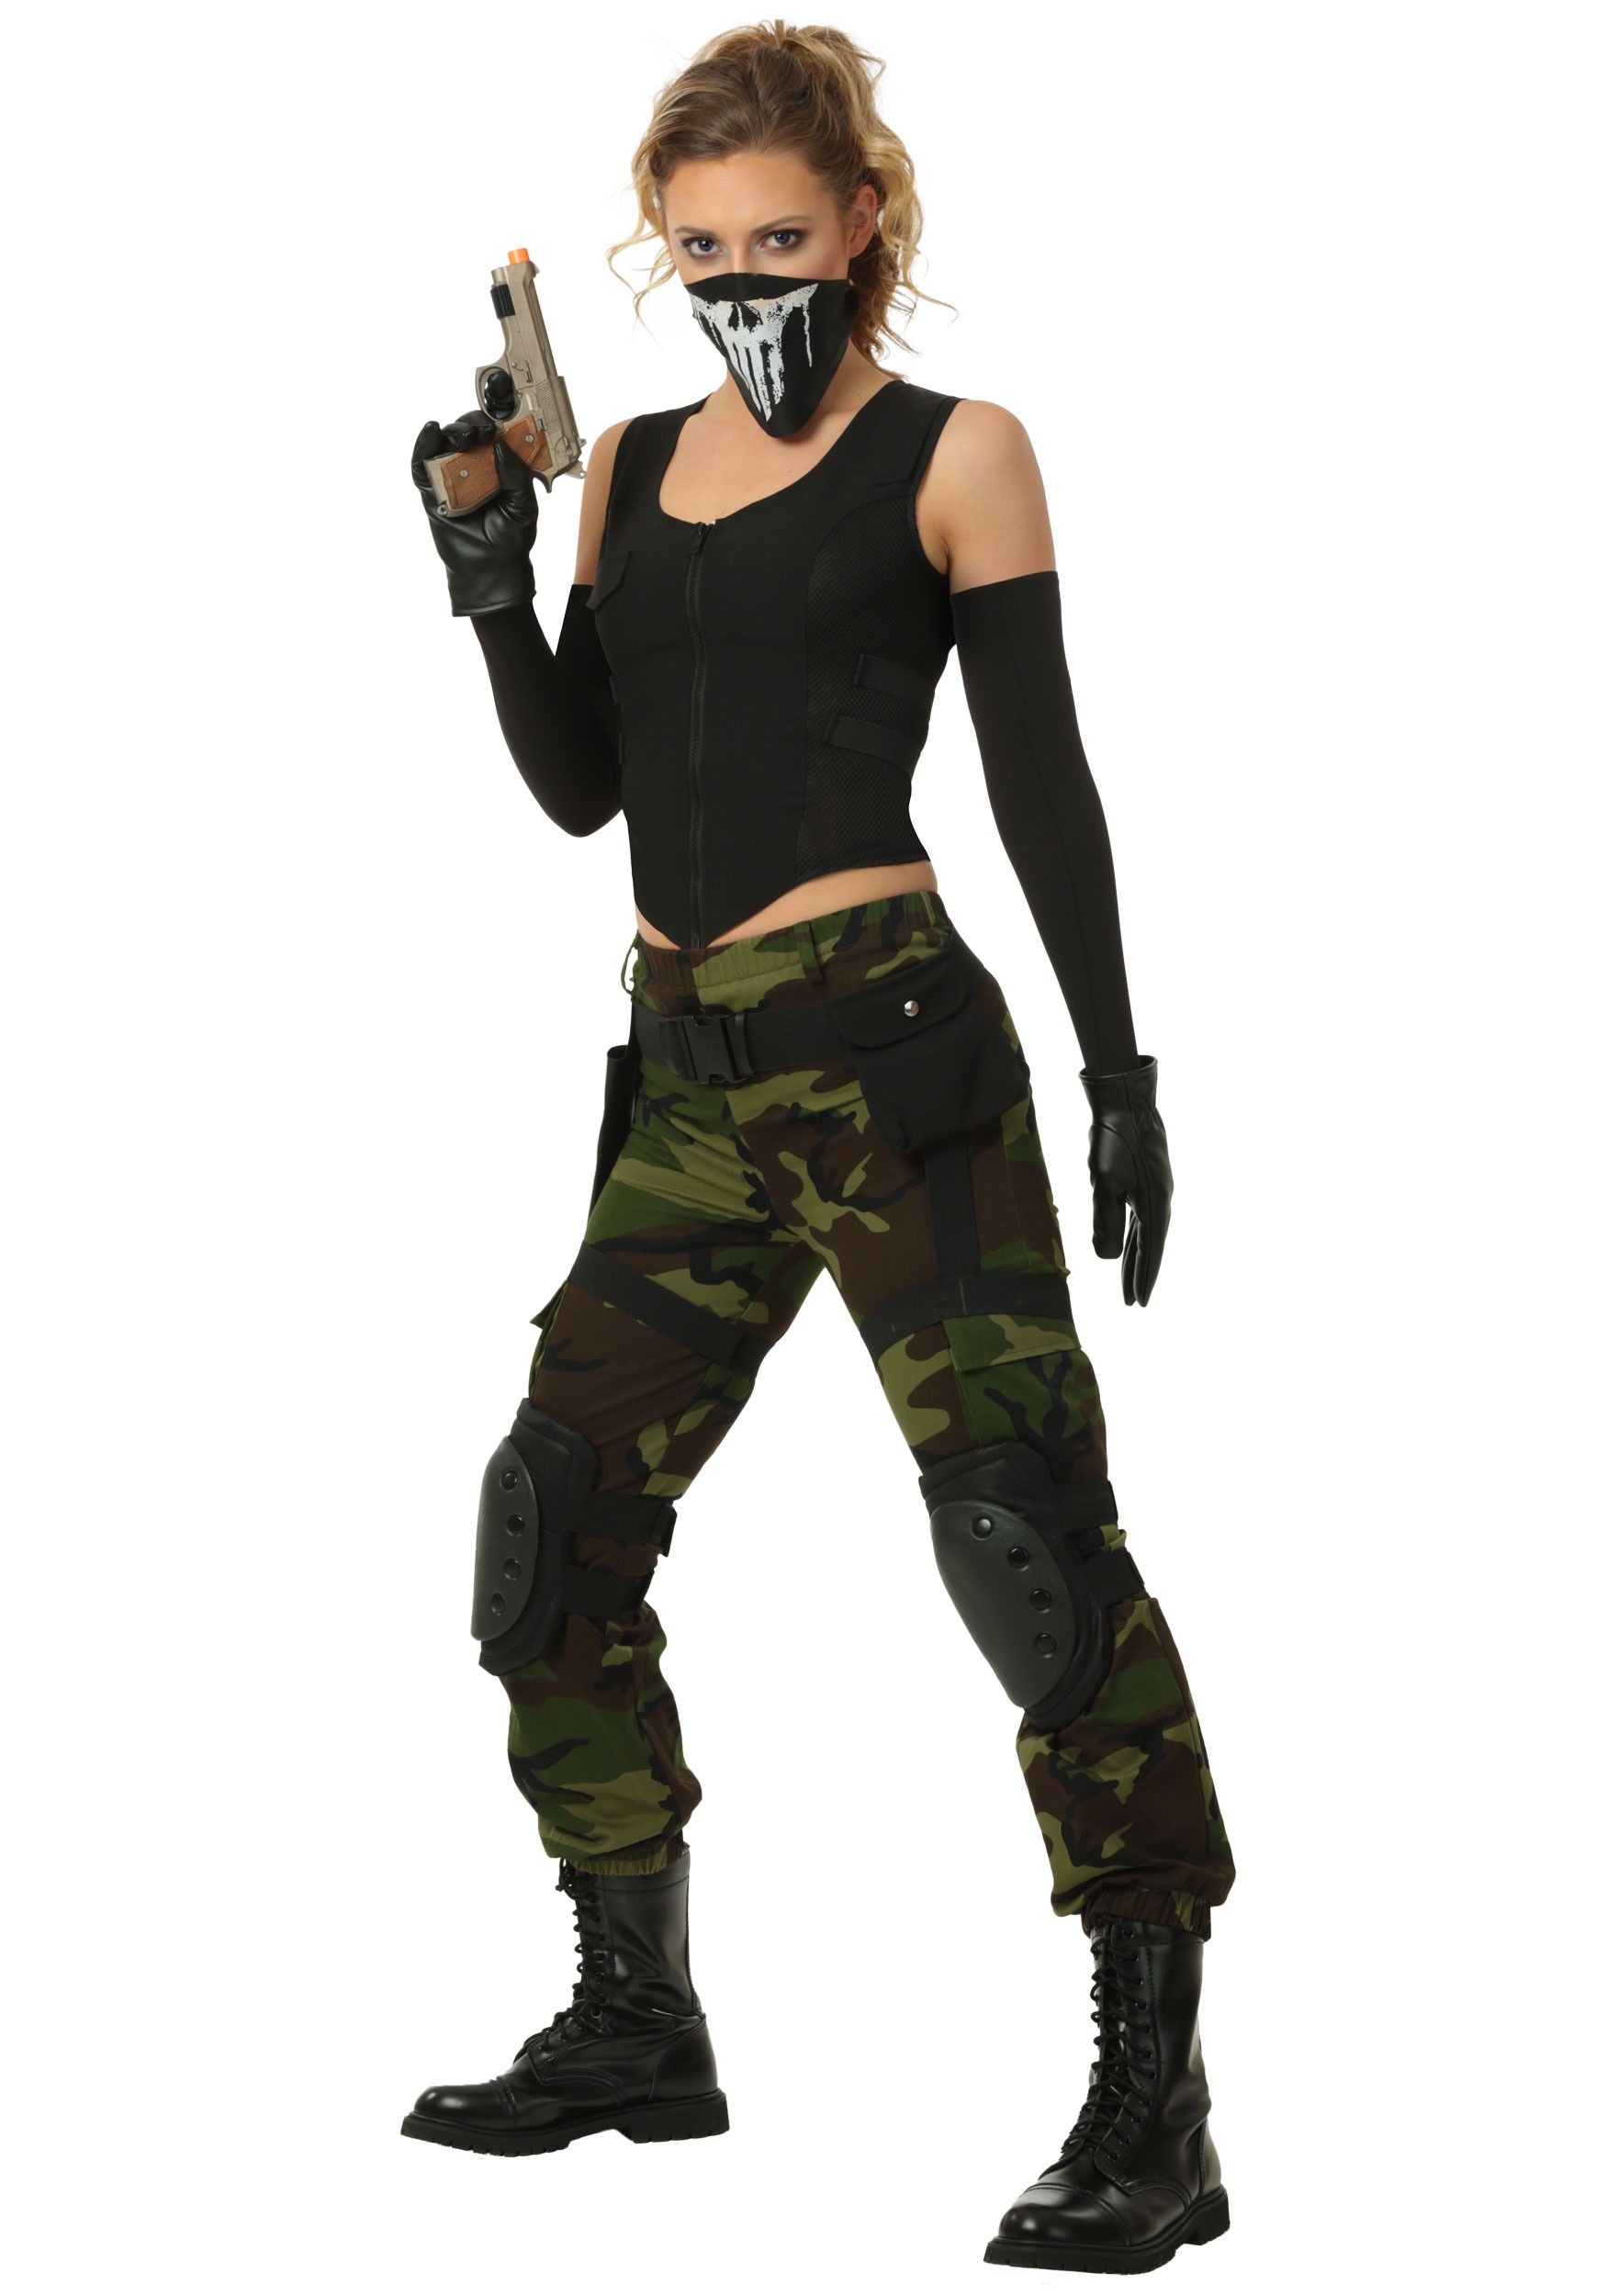 https://images.halloweencostumes.com.mx/products/38482/1-1/disfraz-de-soldado-para-mujer-soldier-plus-size.jpg